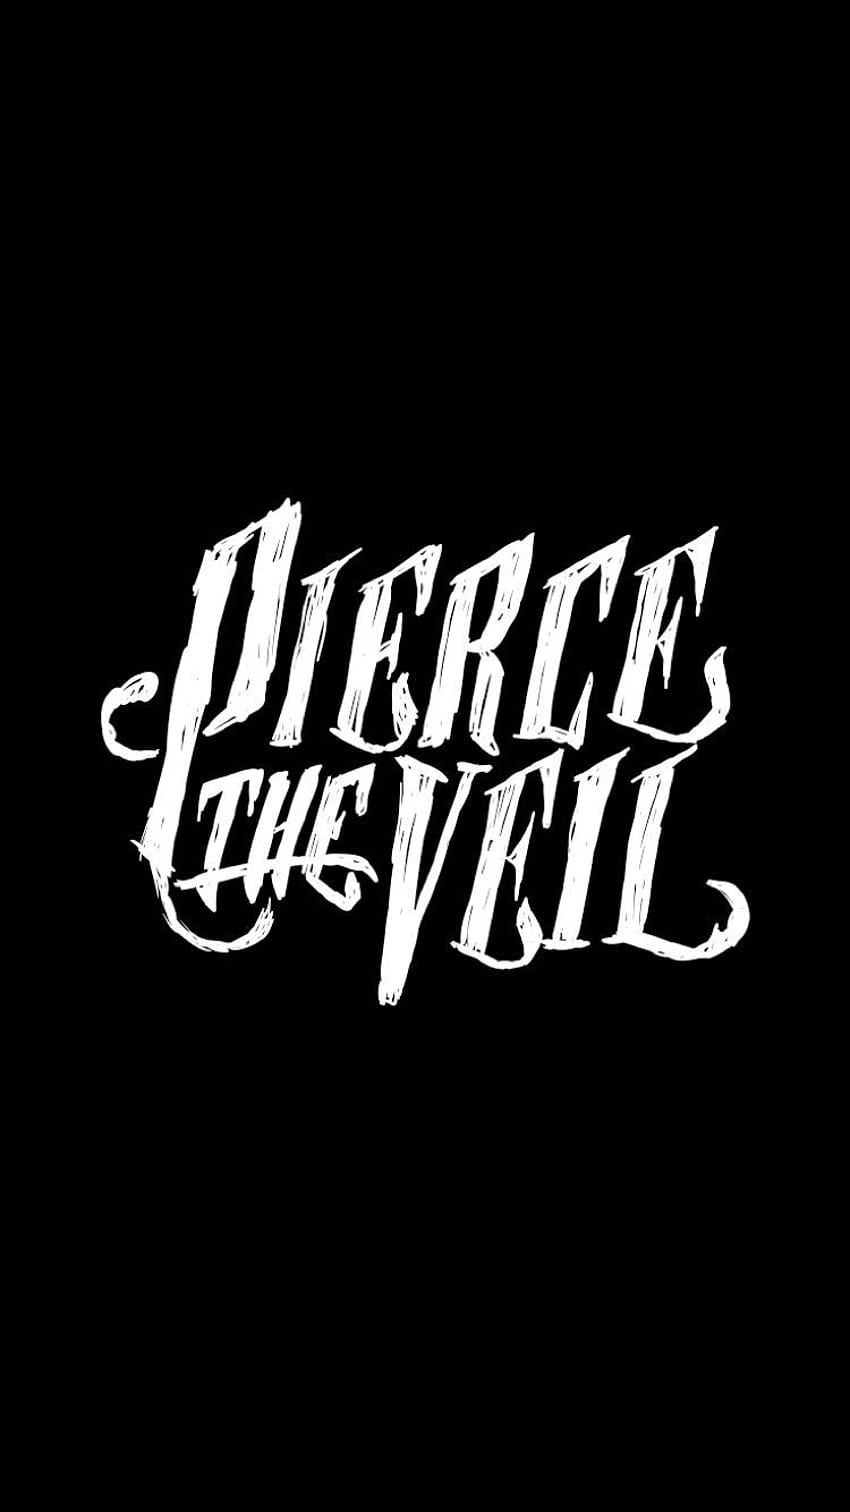 Pierce the veil . Band logo in 2019 HD phone wallpaper